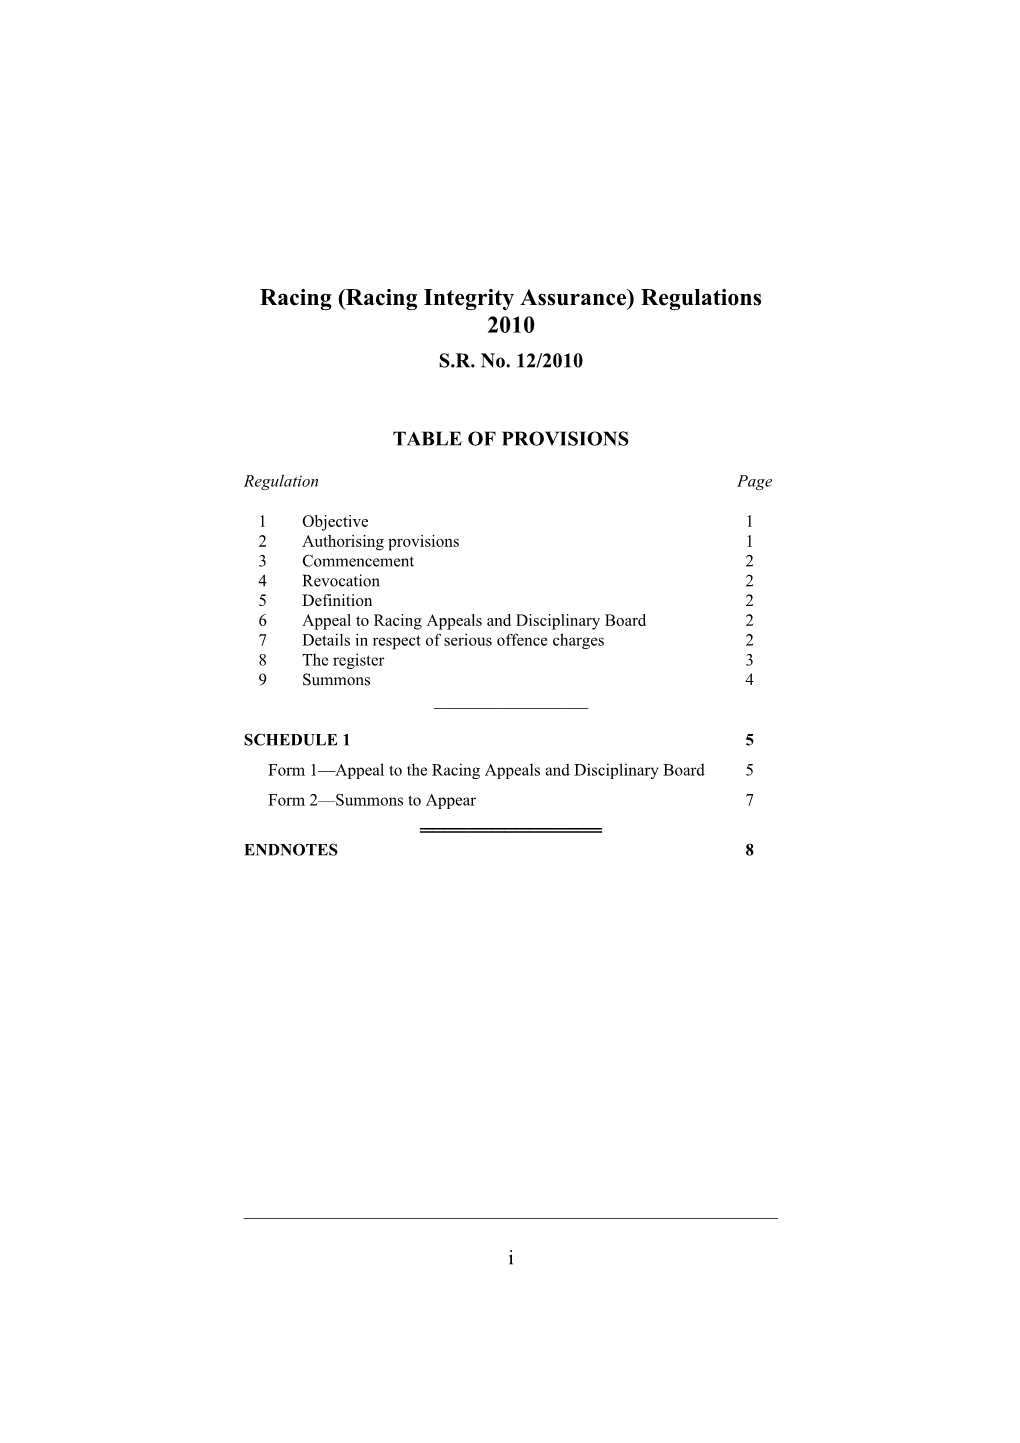 Racing (Racing Integrity Assurance) Regulations 2010